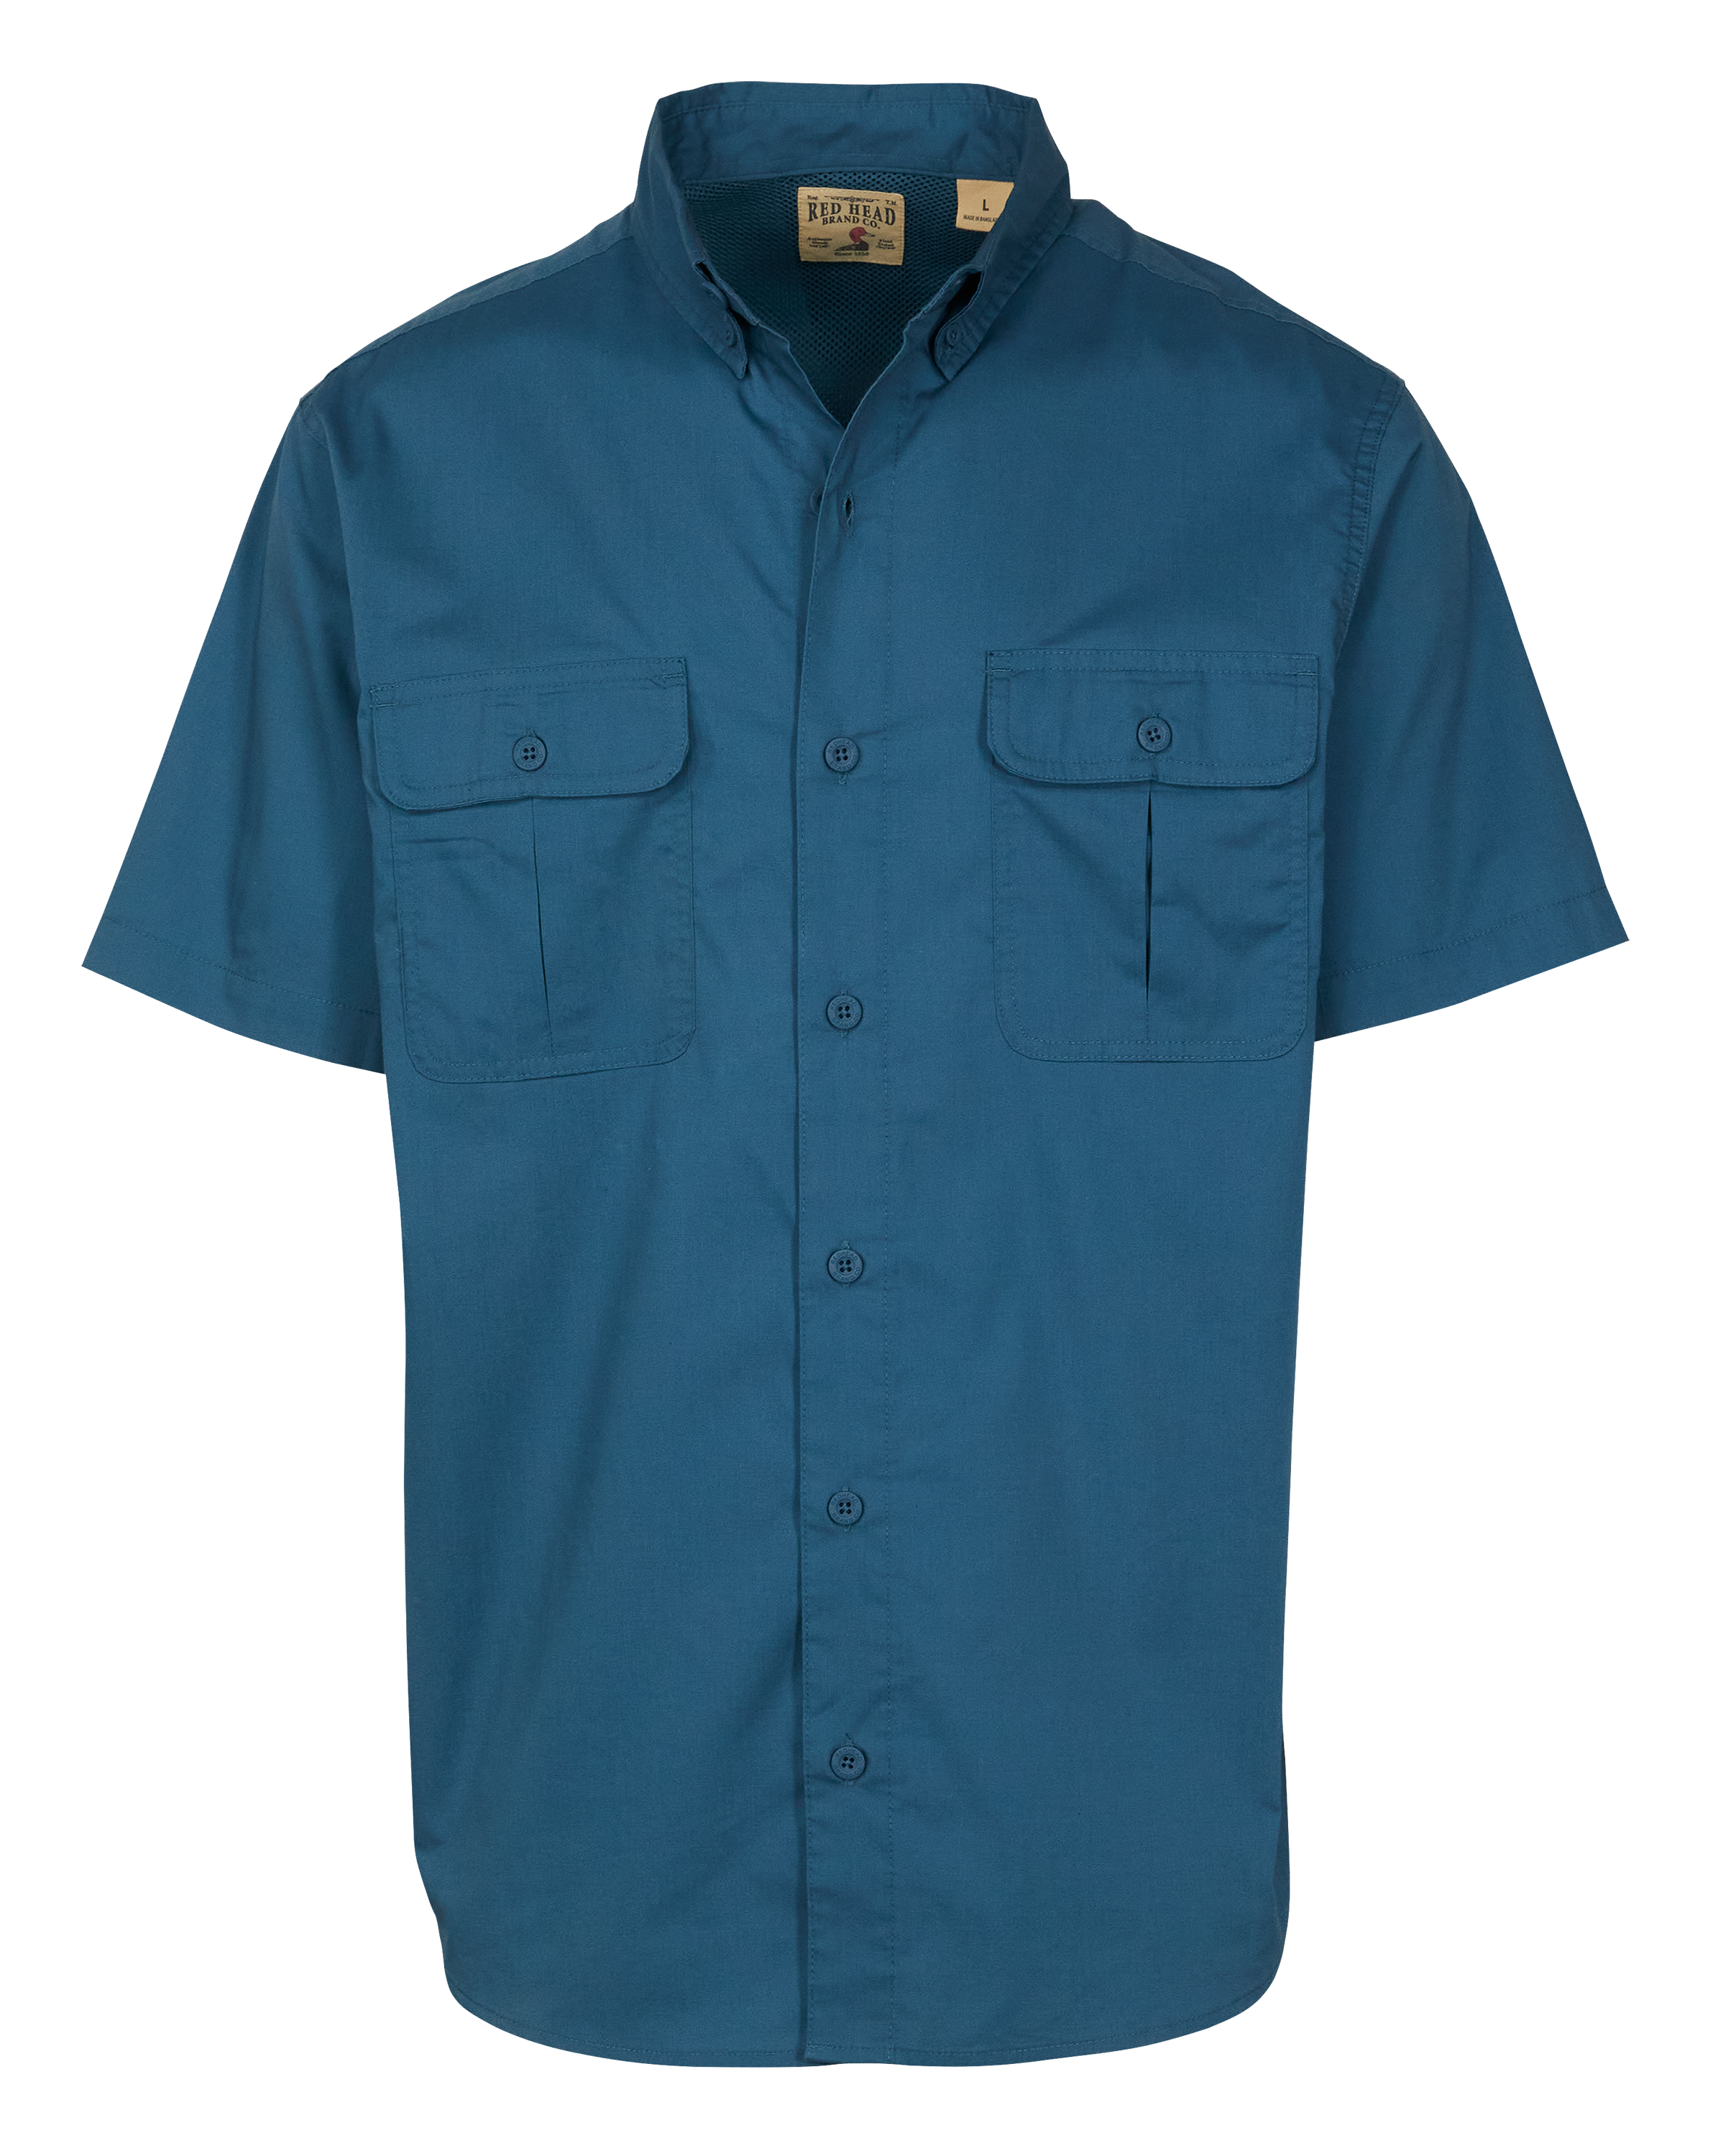 RedHead Cape Vented Button Up Fishing Shirt Men’s 2XL Short Sleeve Pockets  XXL